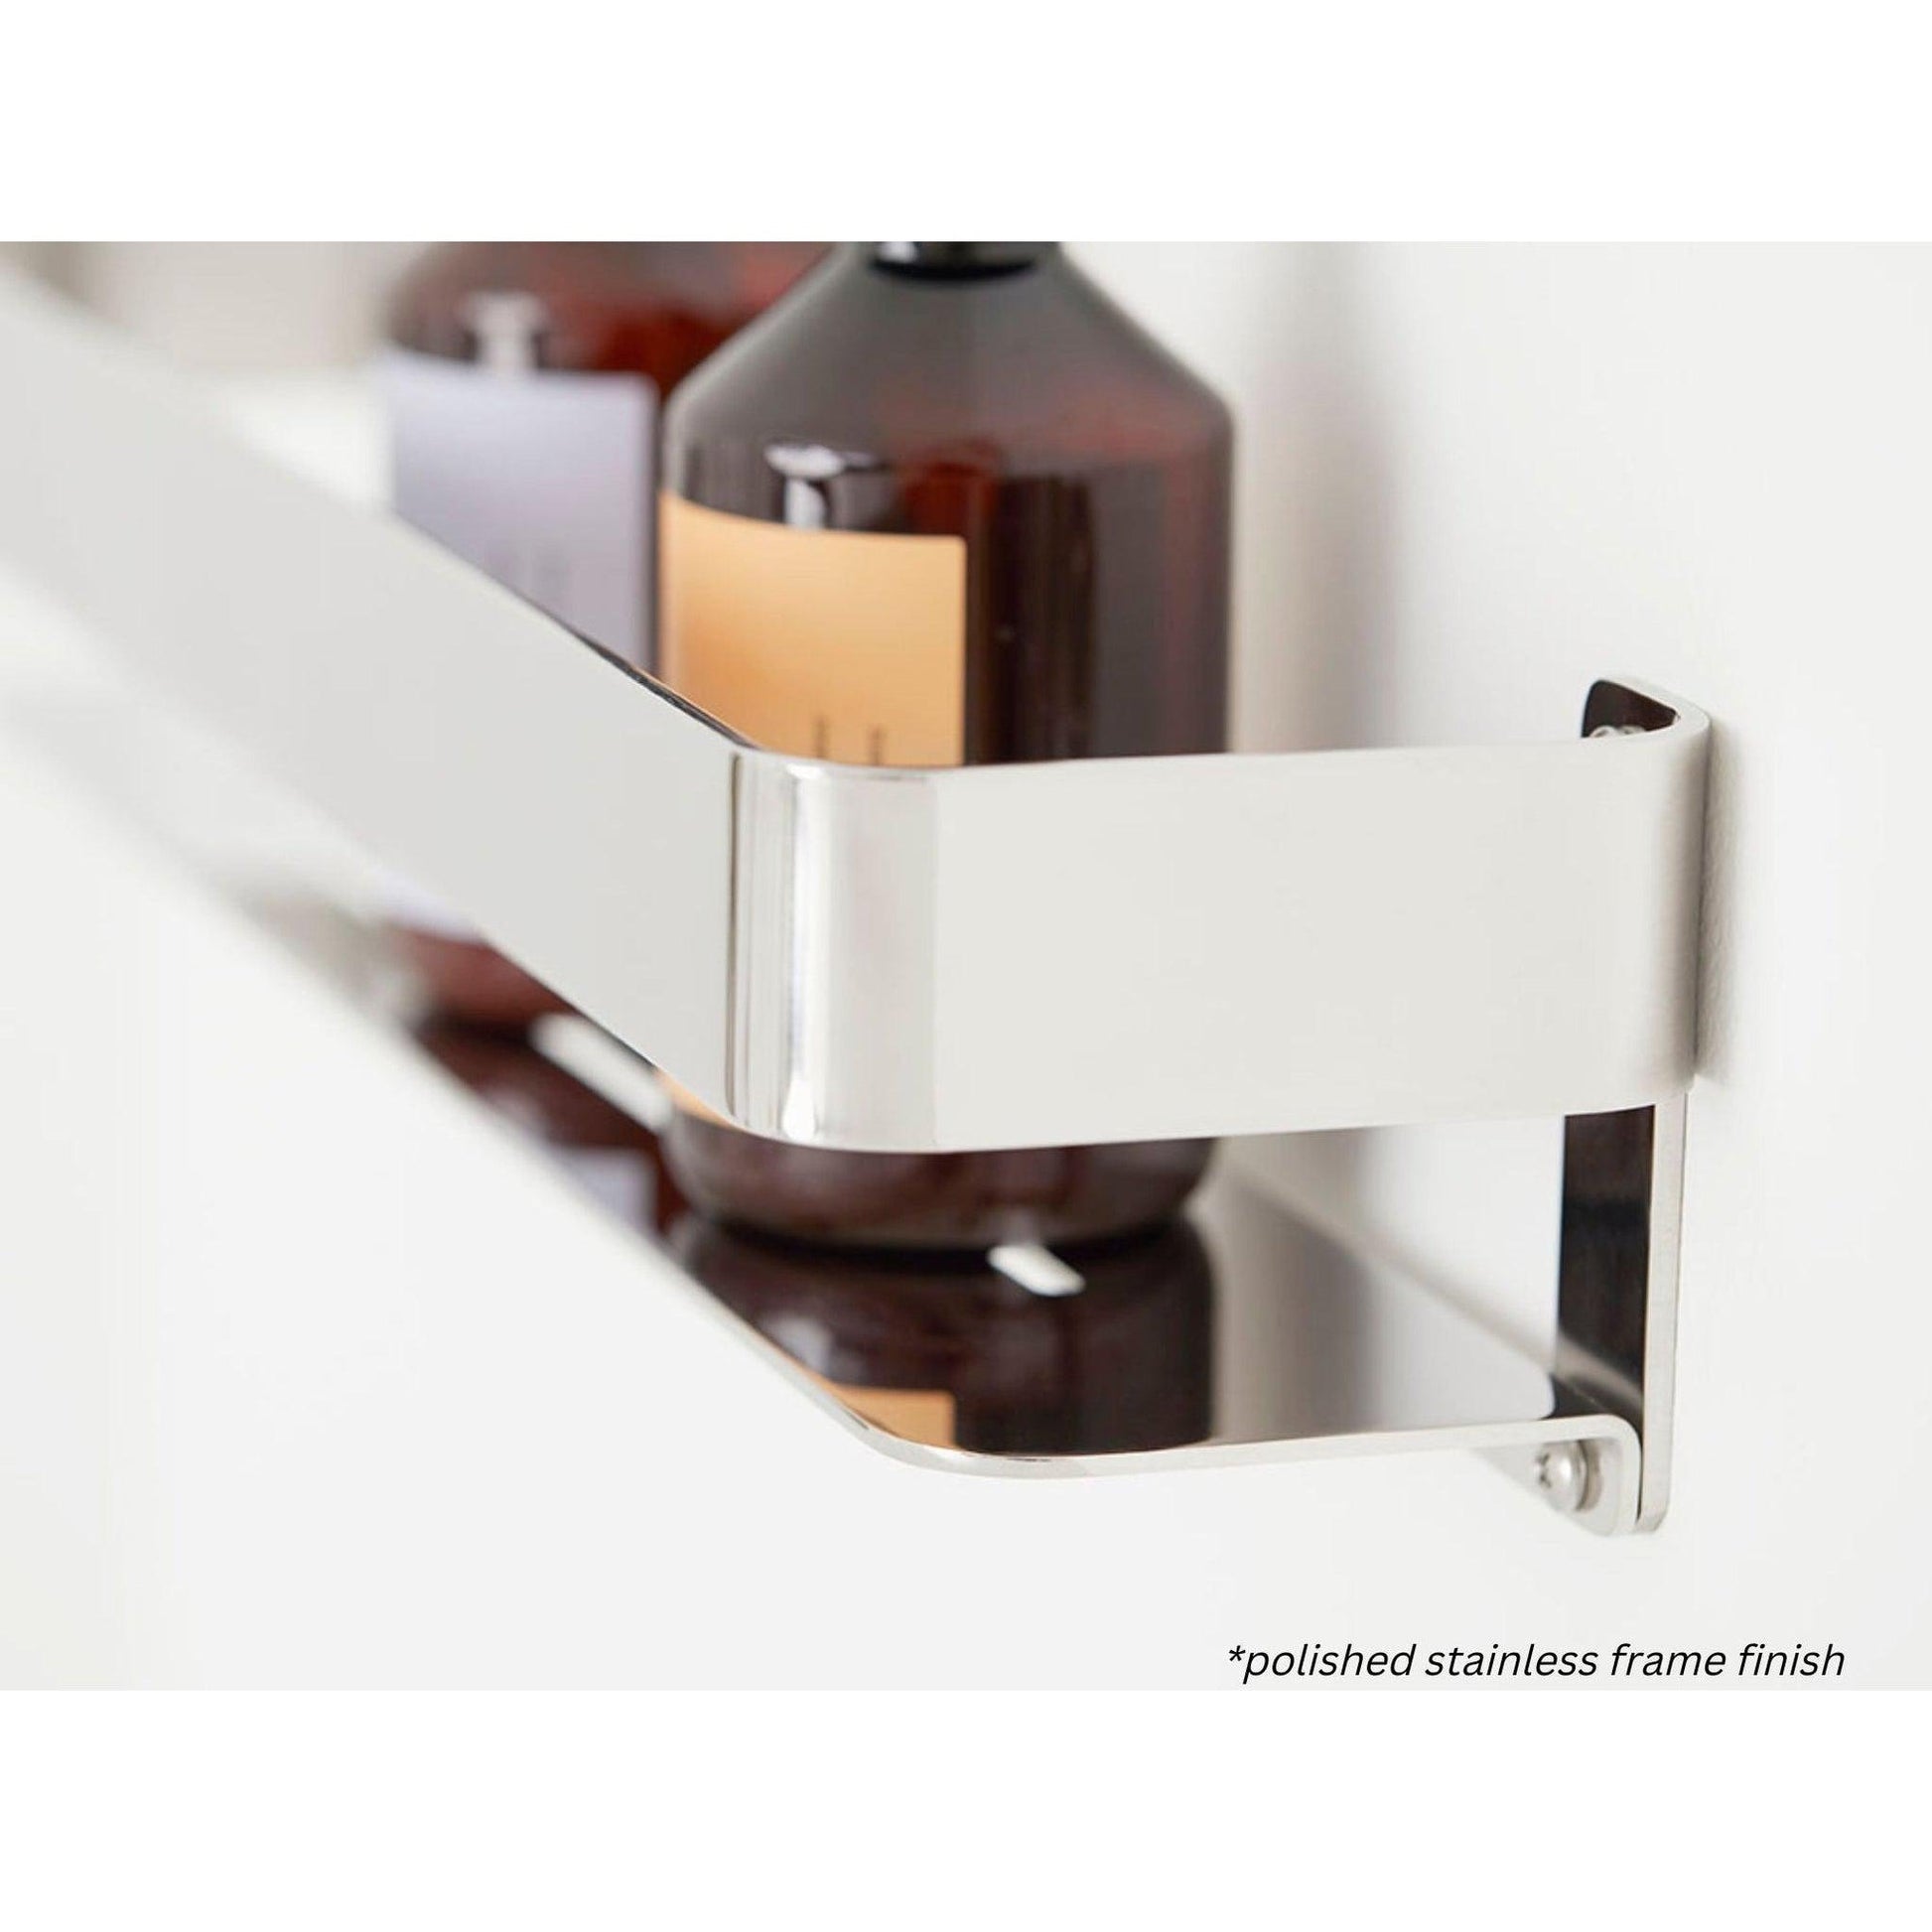 Seachrome Coronado 700 Series 18" x 4" Rectangular Shower Shelf With Rail in White Wrinkle Powder Coated Stainless Steel Finish